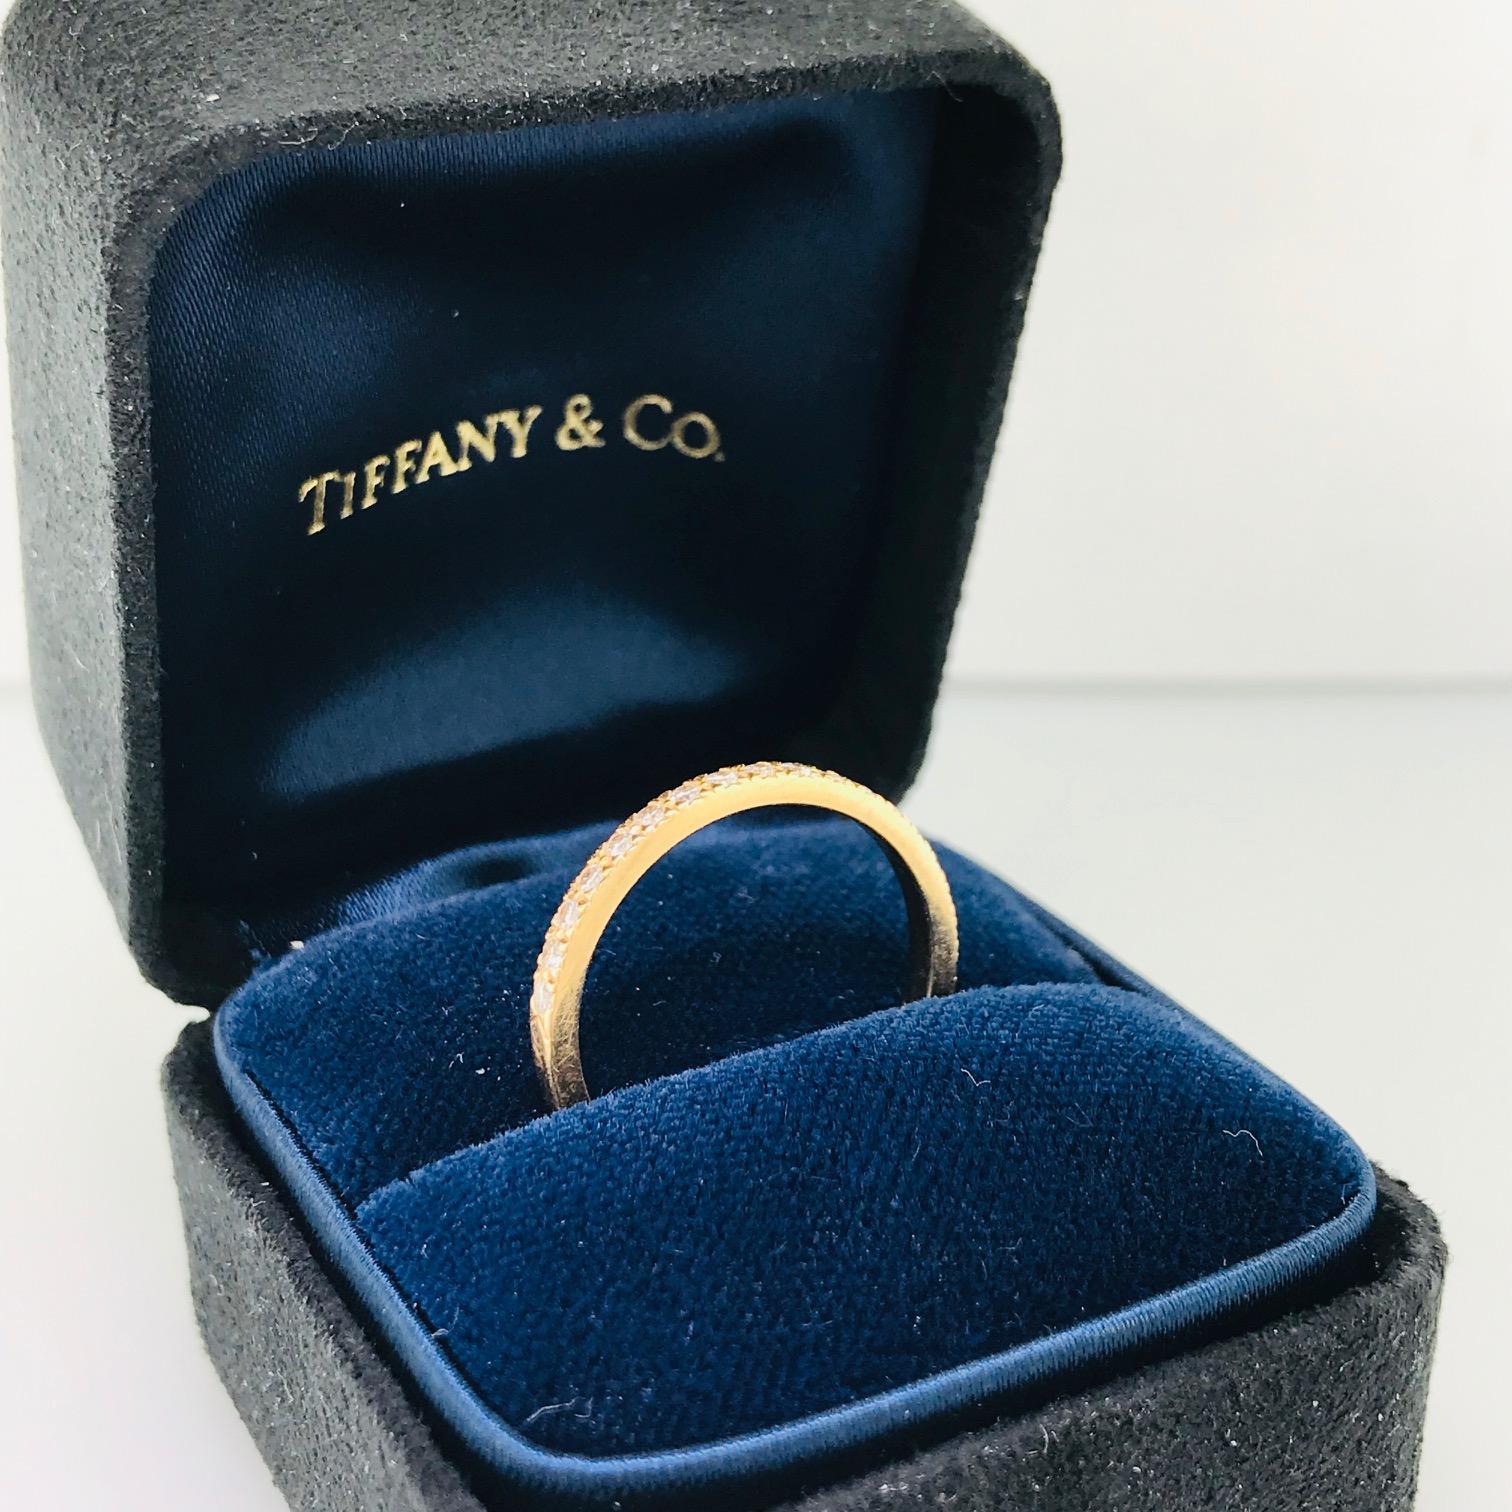 Contemporary Tiffany Wedding Band 18k Rose Gold Tiffany & Co. Ring, .30 carat diamond weight